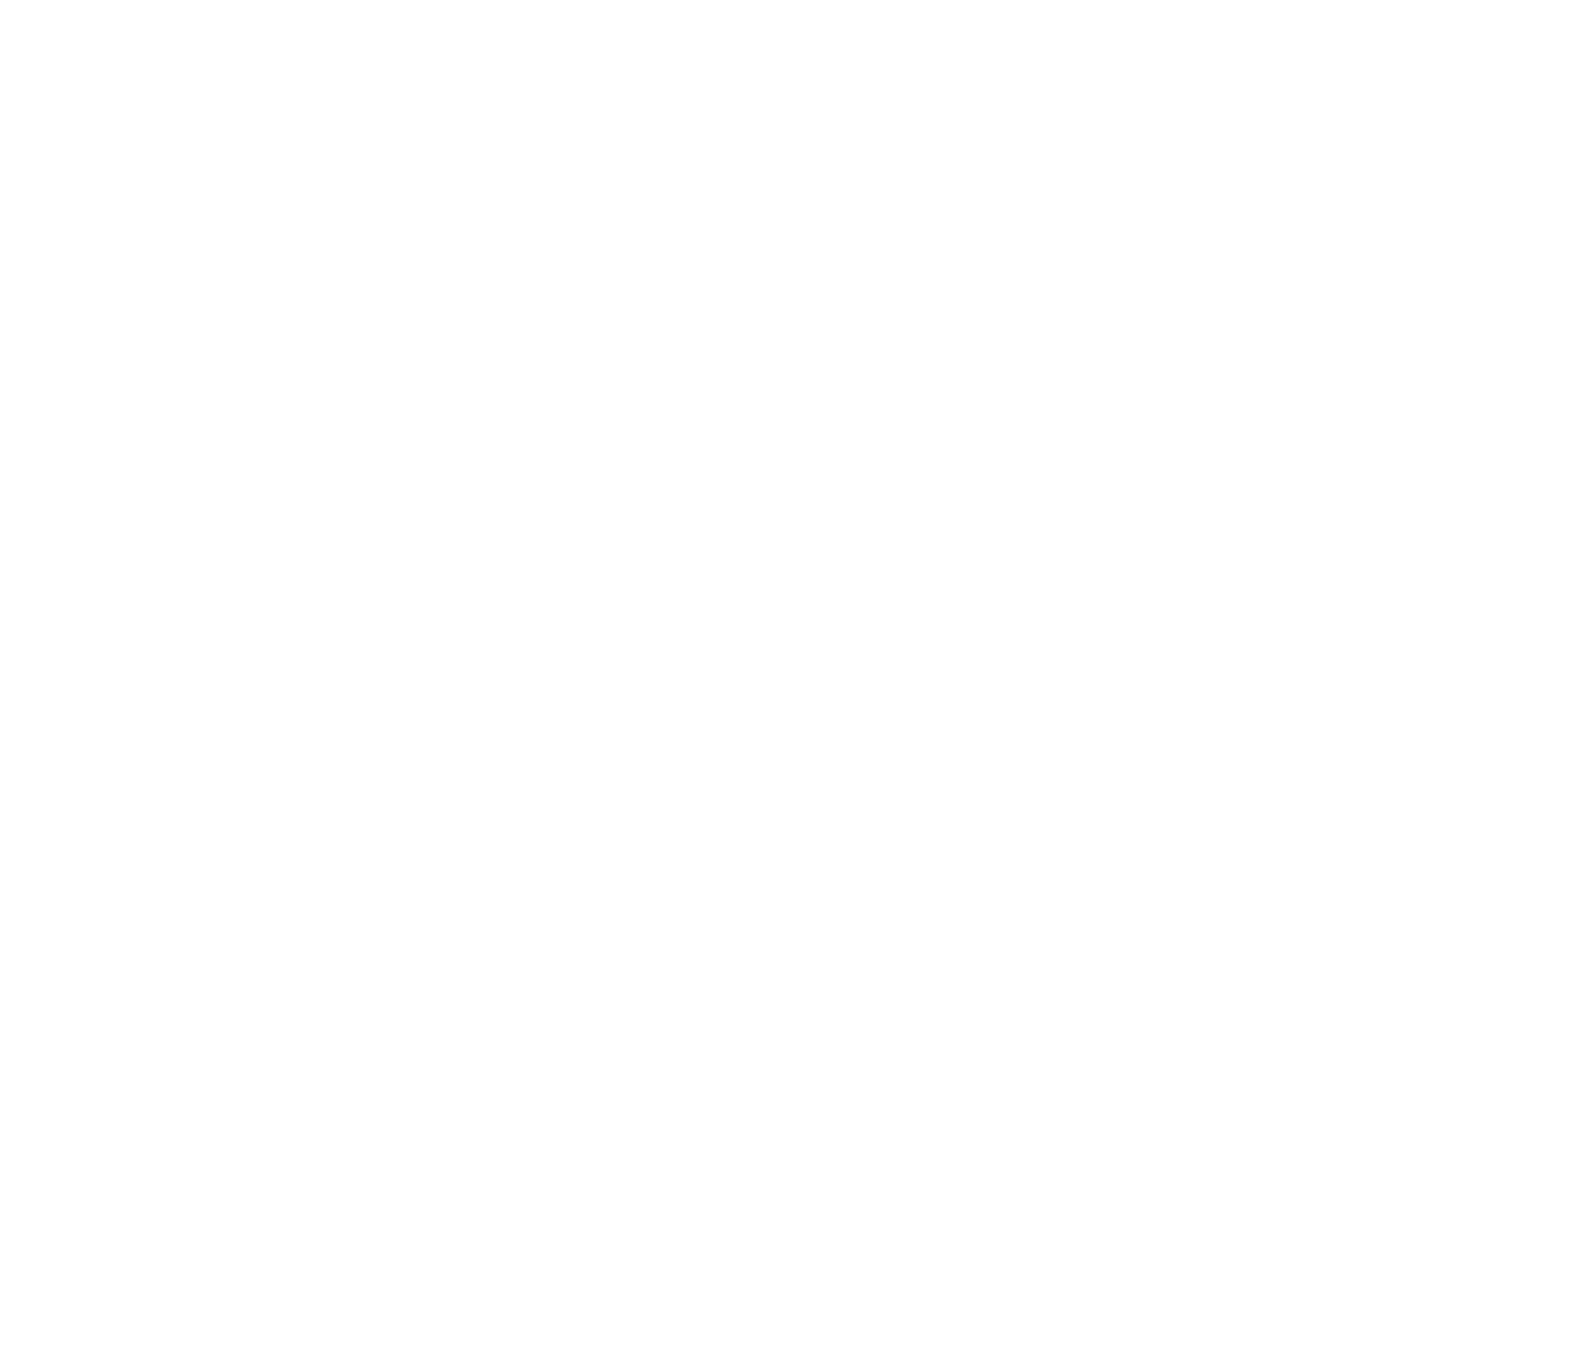 United Utilities logo for dark backgrounds (transparent PNG)